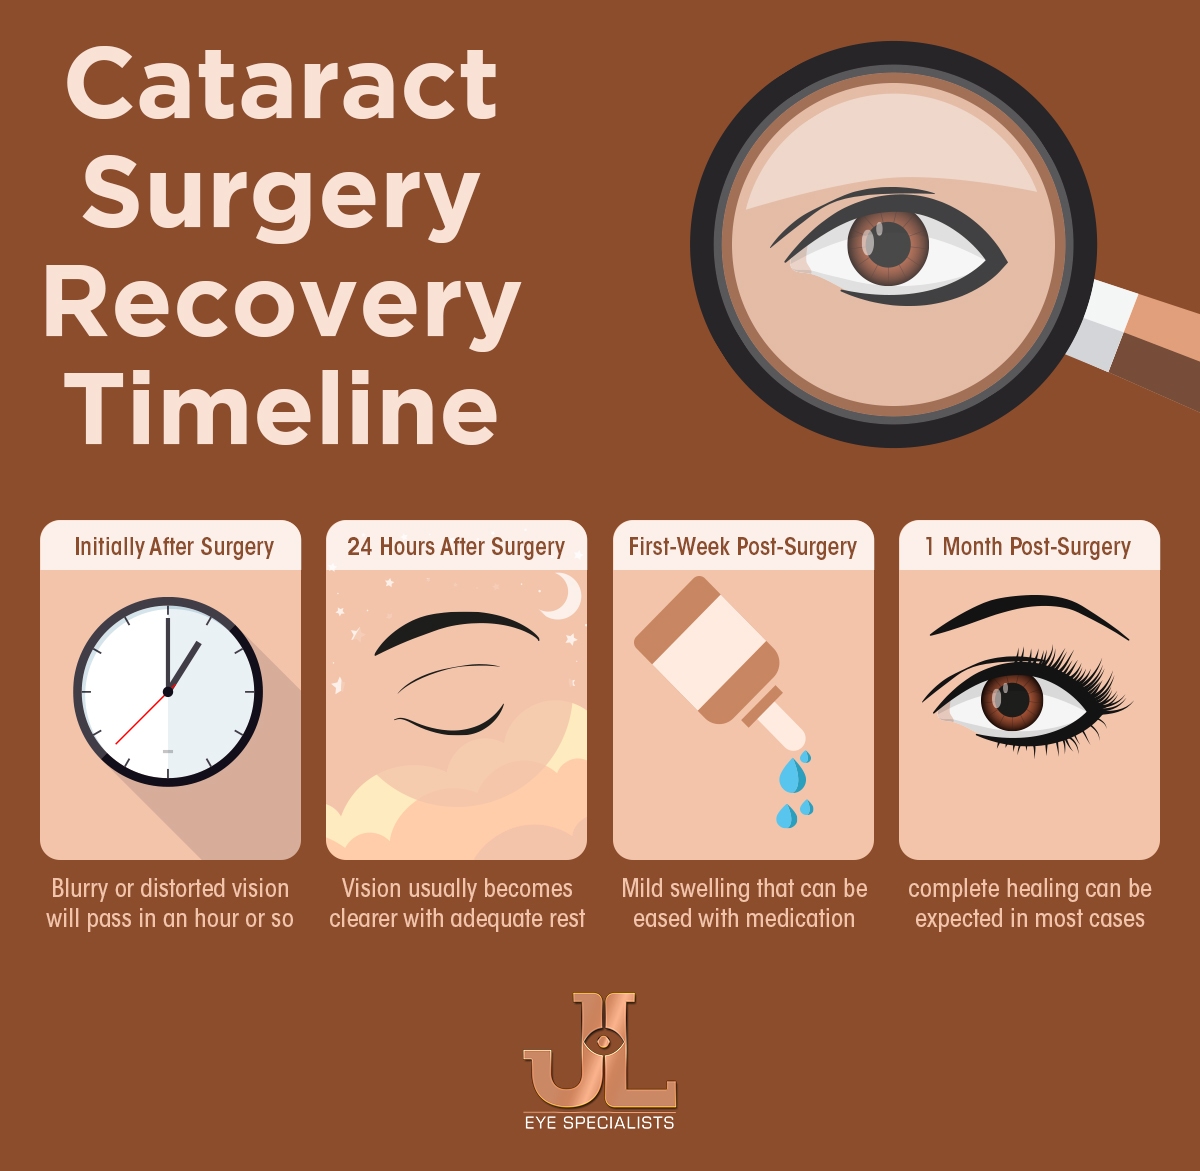 Cataract-Blog-image-jleye